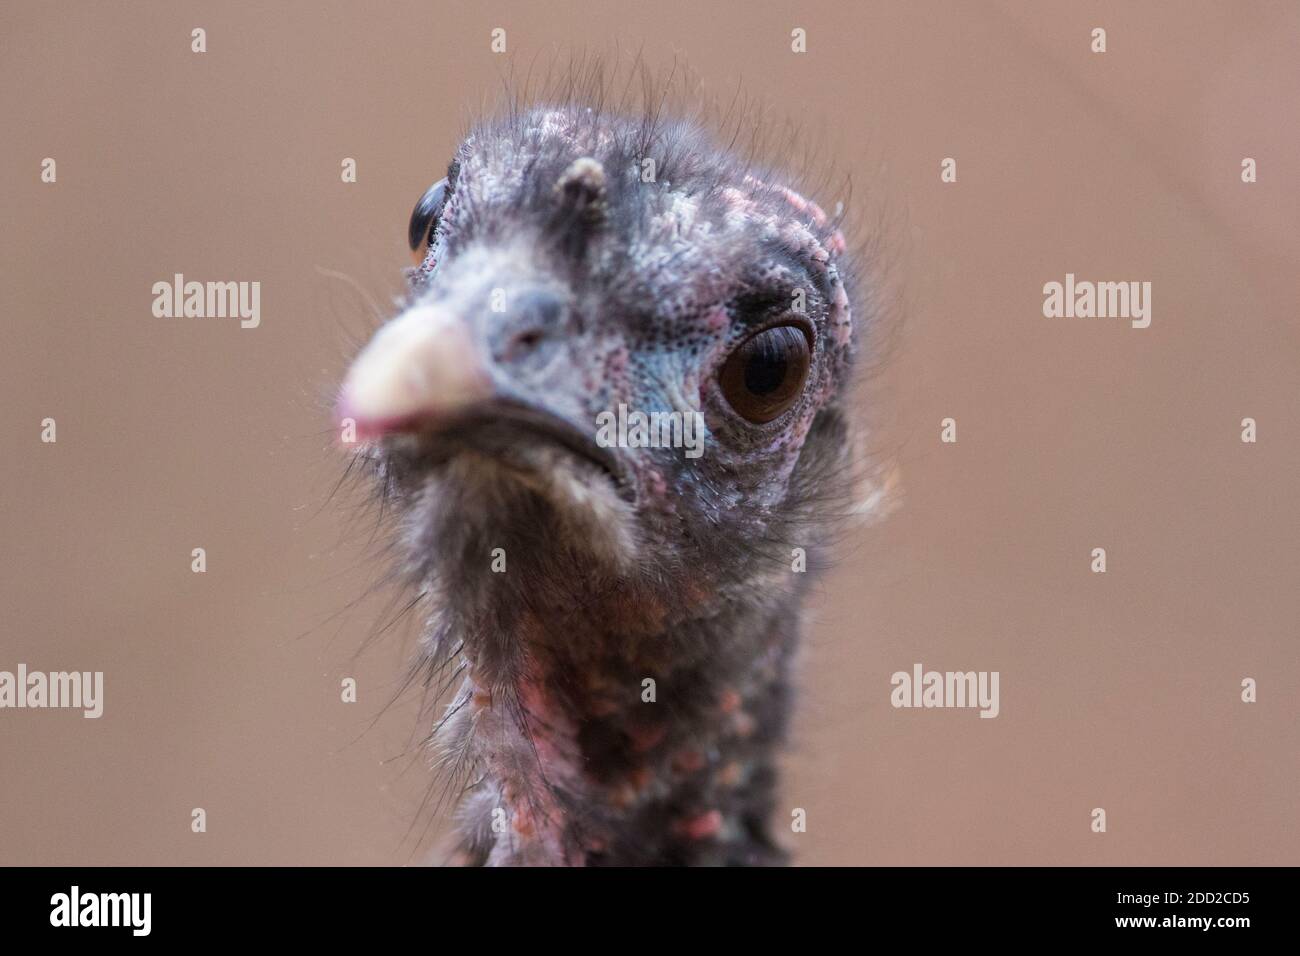 wild turkey portrait Stock Photo